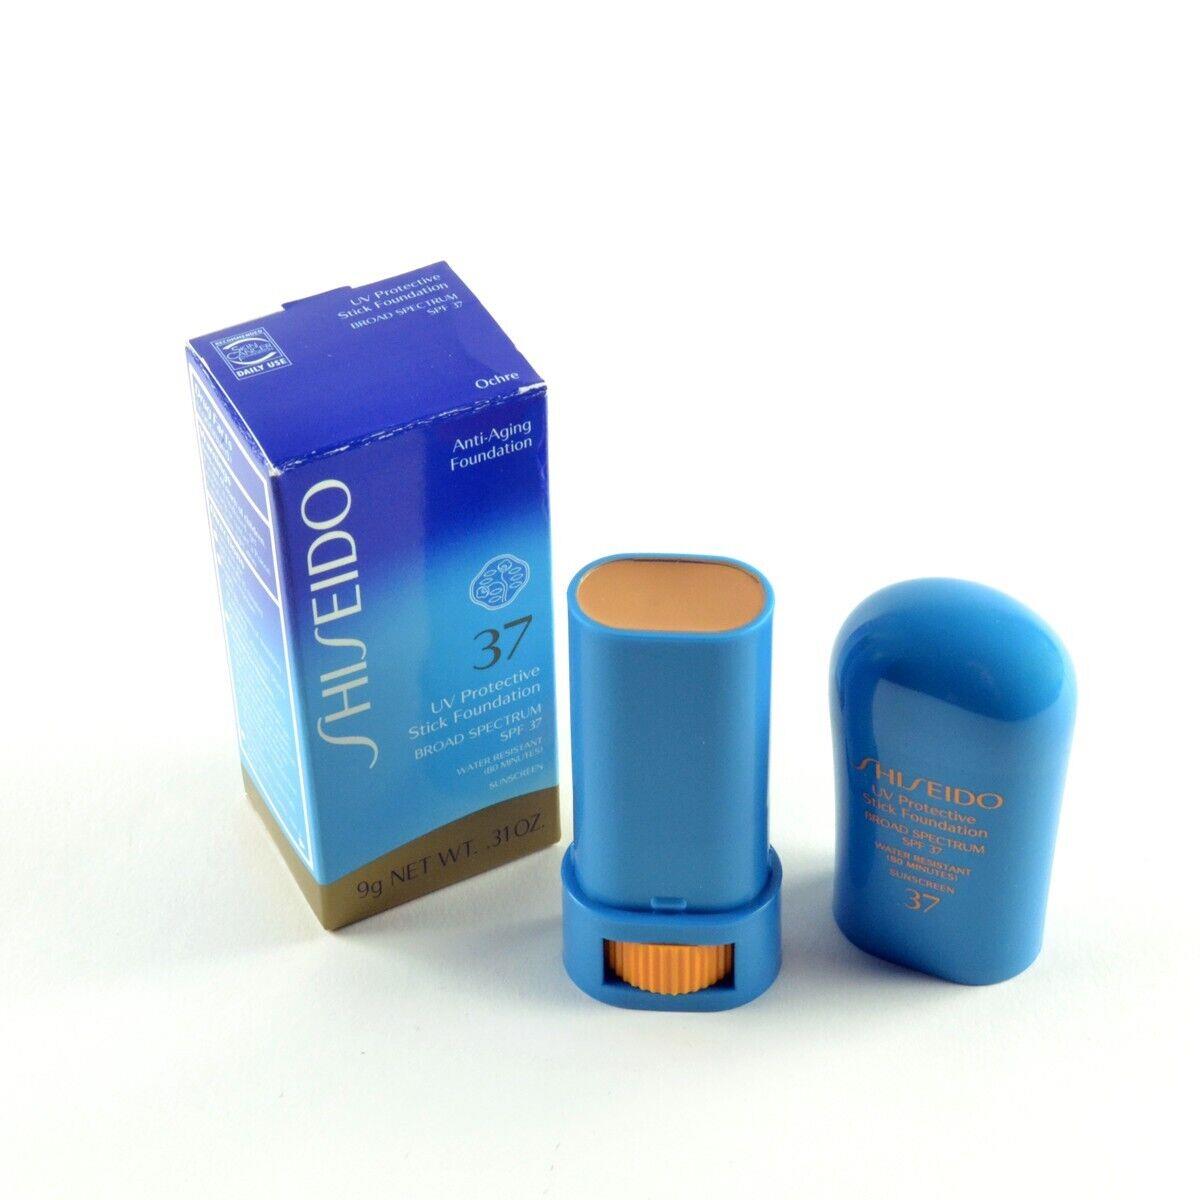 Shiseido UV Protective Stick Foundation Spf 37 Ochre - Size 9 g / 0.31 Oz